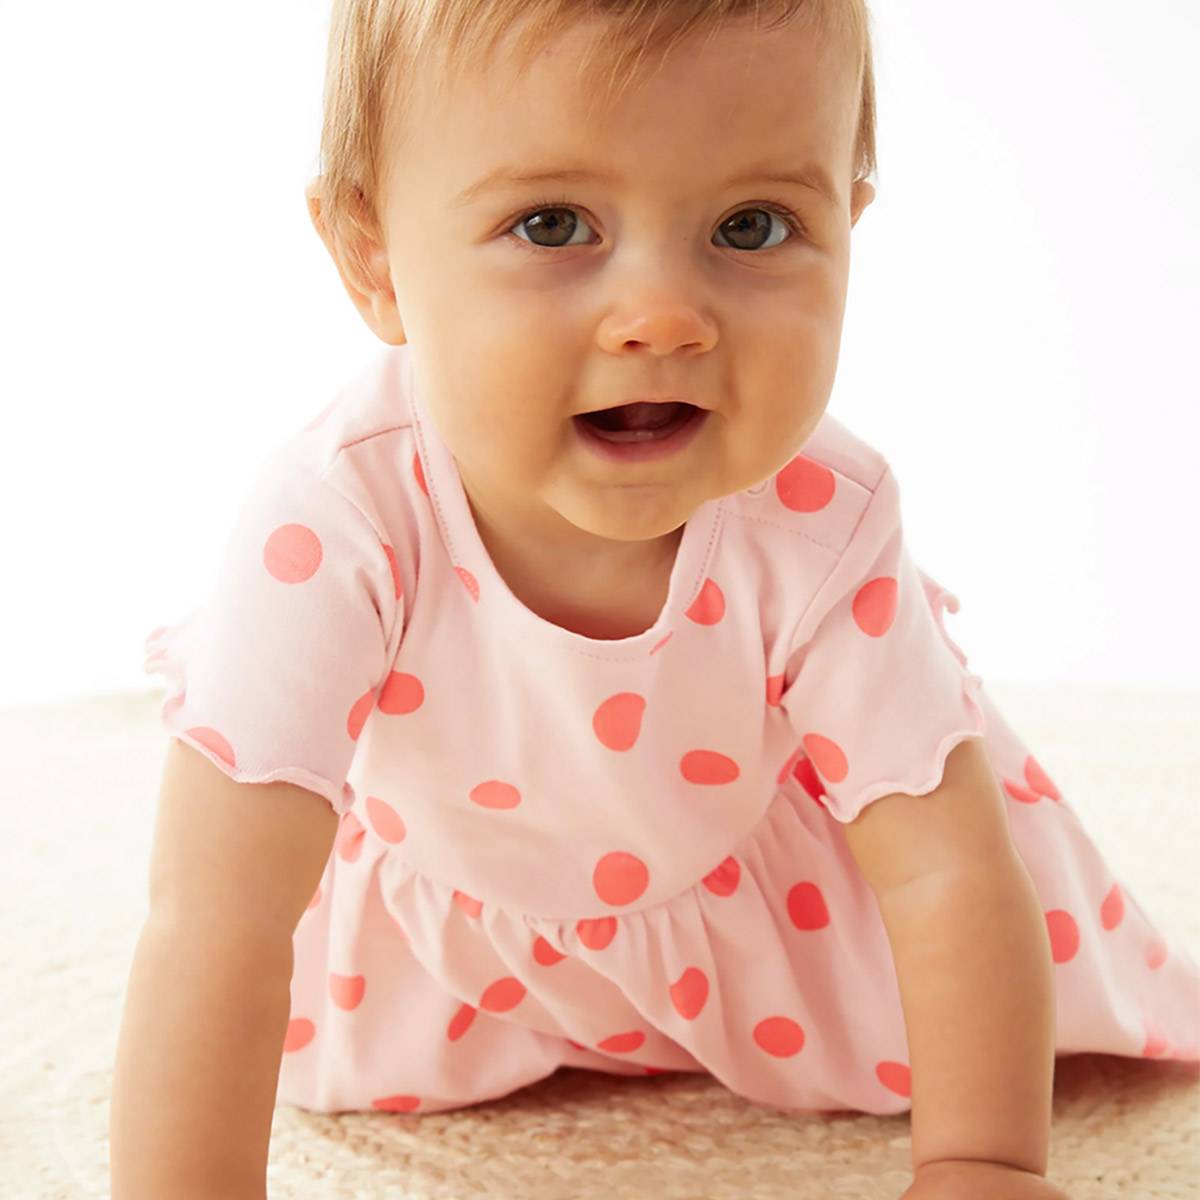 Baby wearing pink polka-dot dress. Shop for baby girls